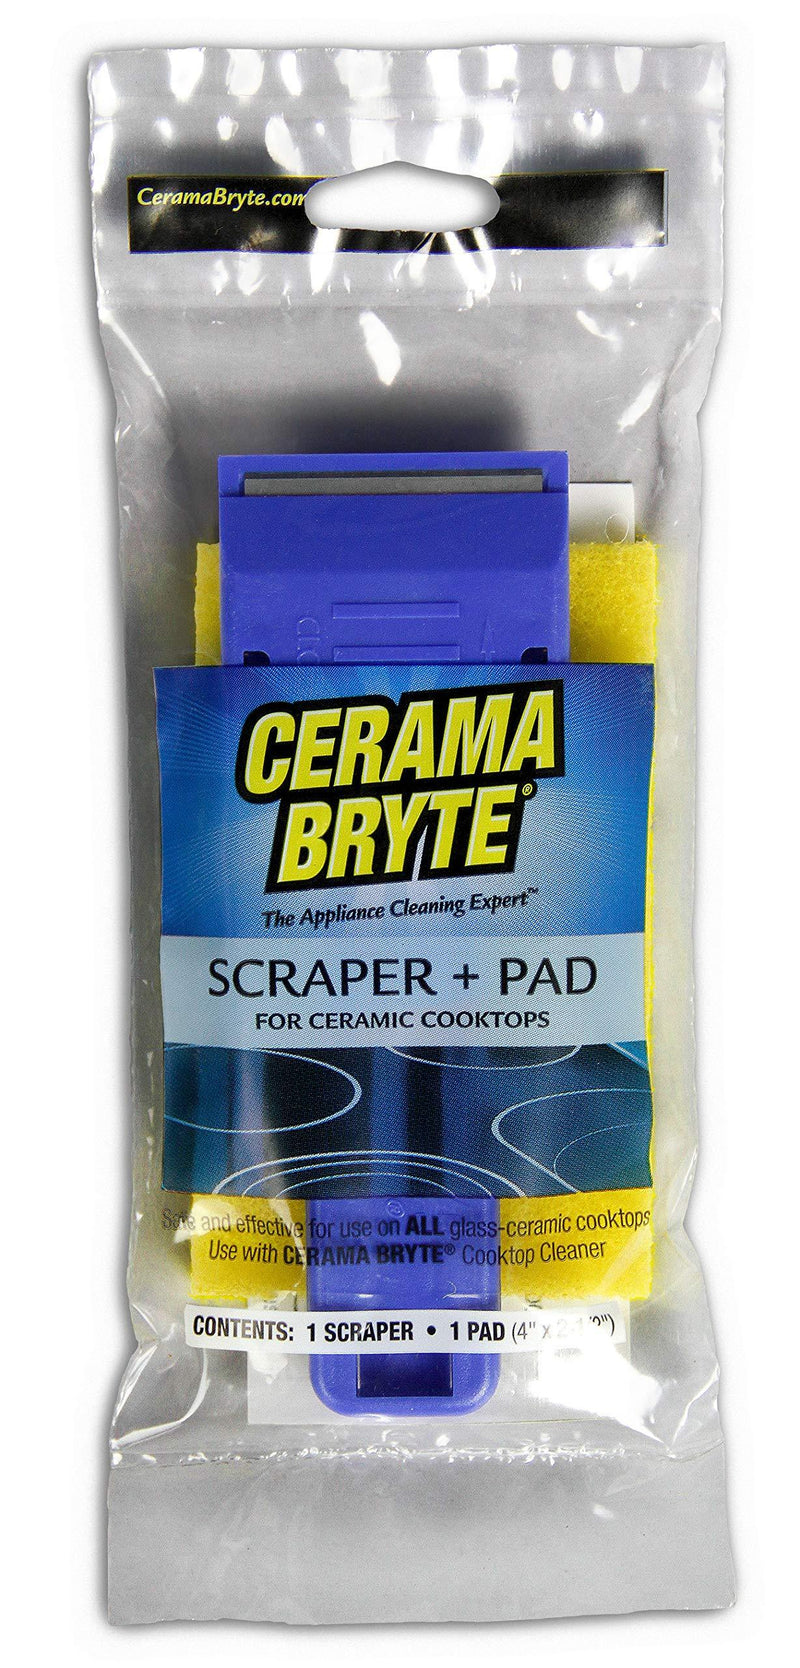  [AUSTRALIA] - Cerama Bryte Multi-Purpose Cooktop Scraper and Pad Combo Combo Scraper and Pad